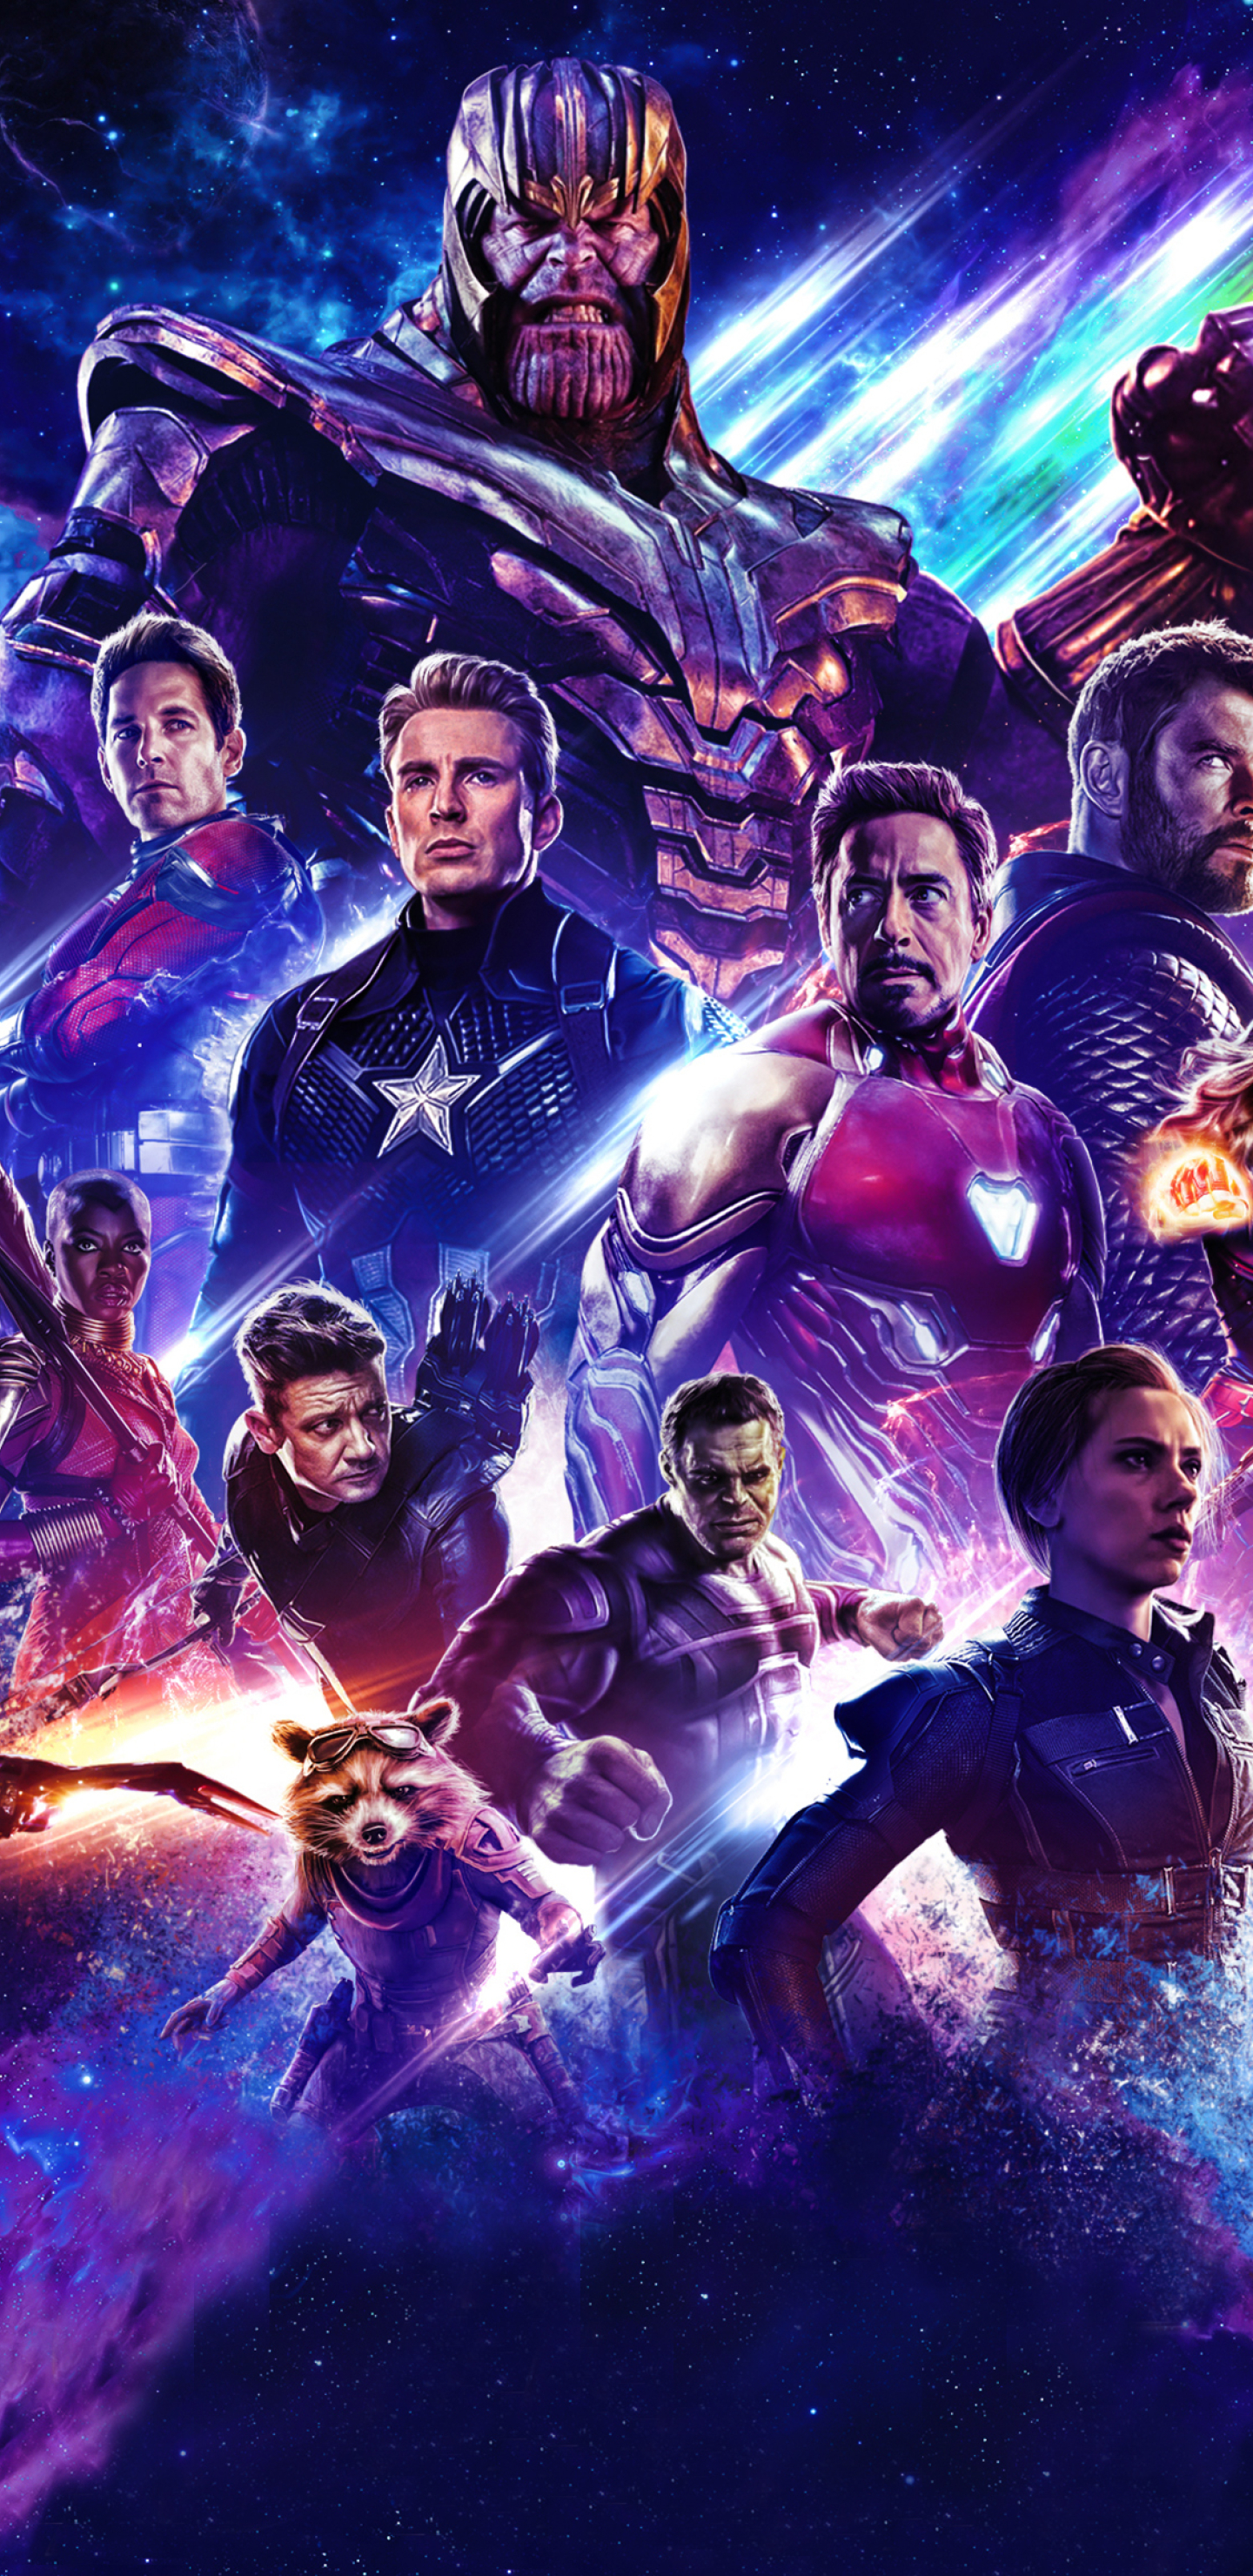 1440x2960 Avengers Endgame 2019 Movie Samsung Galaxy Note 9